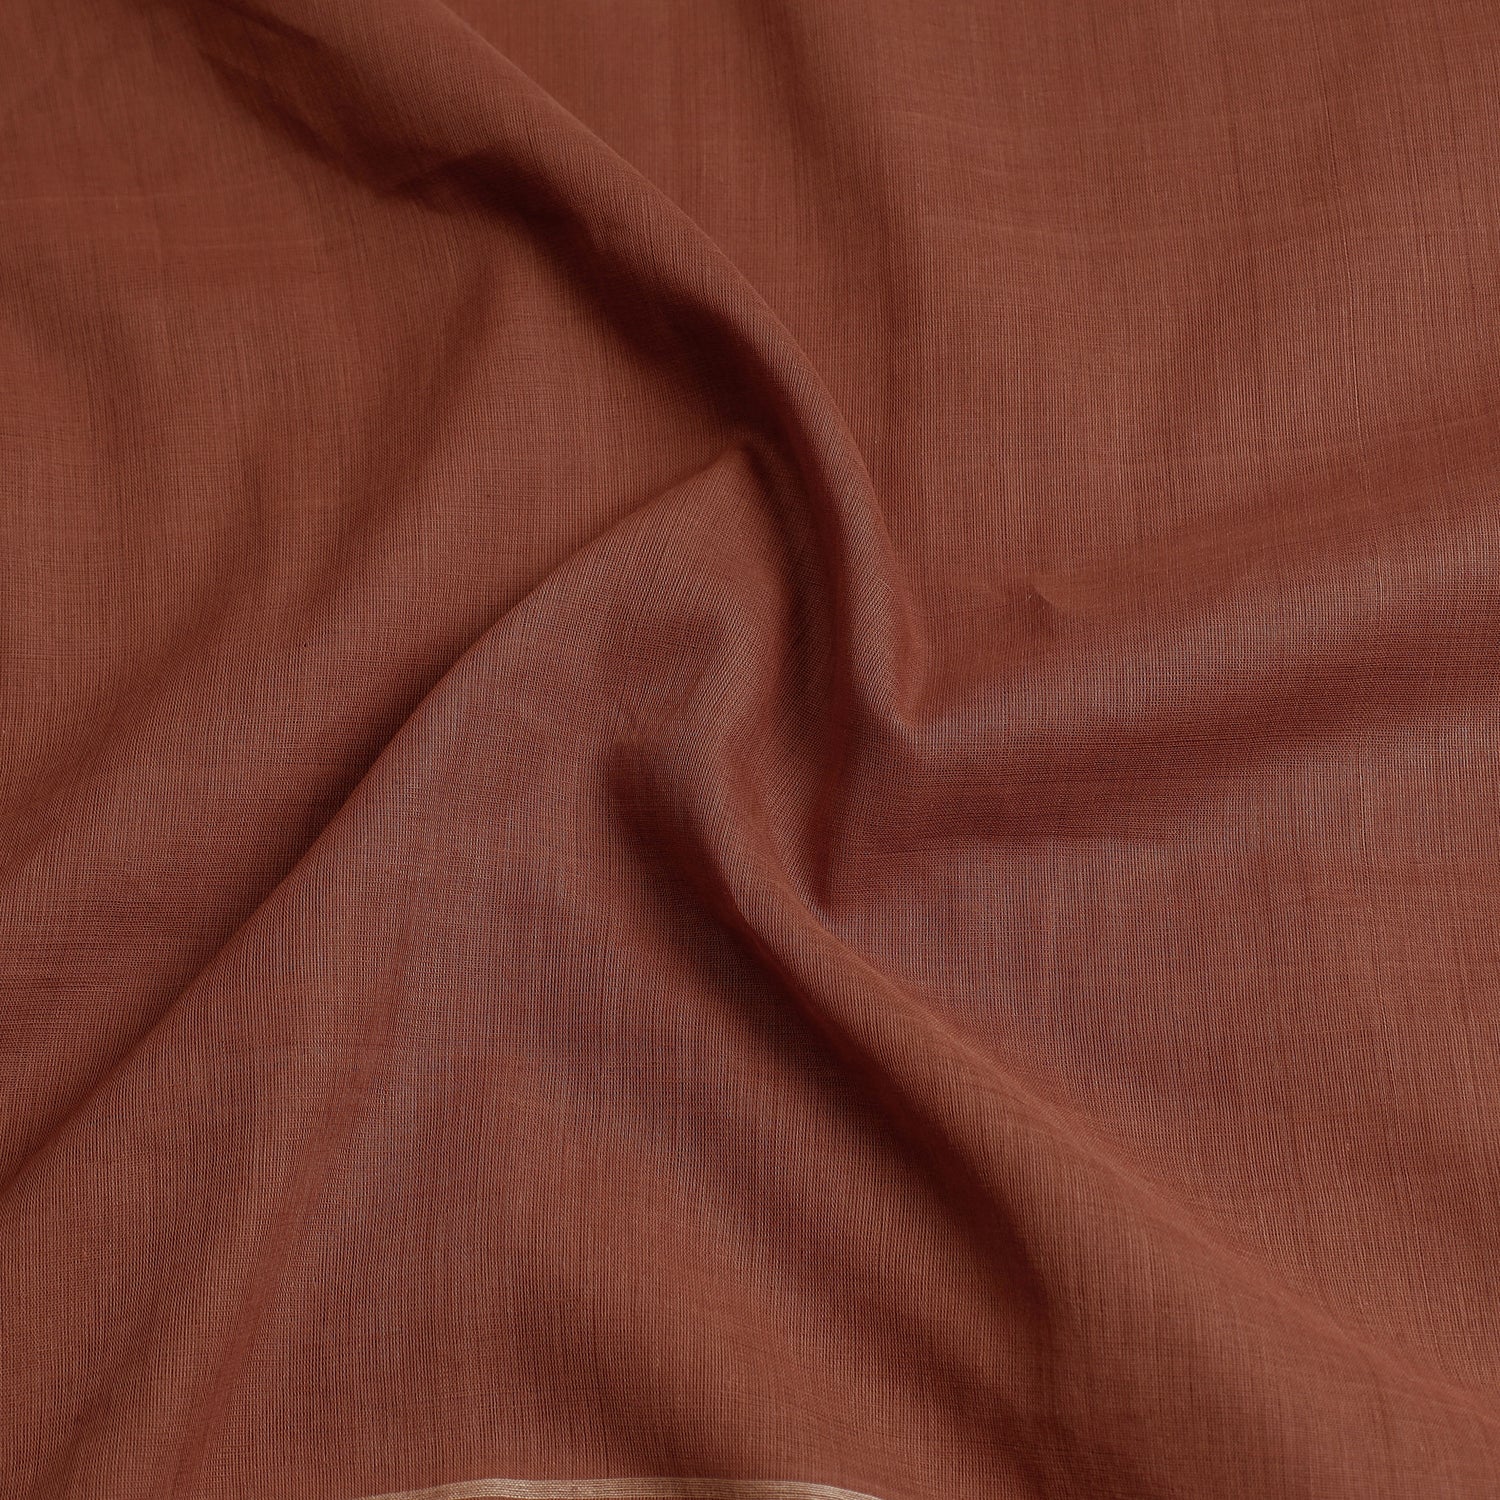 Begampuri Handloom Cotton Saree